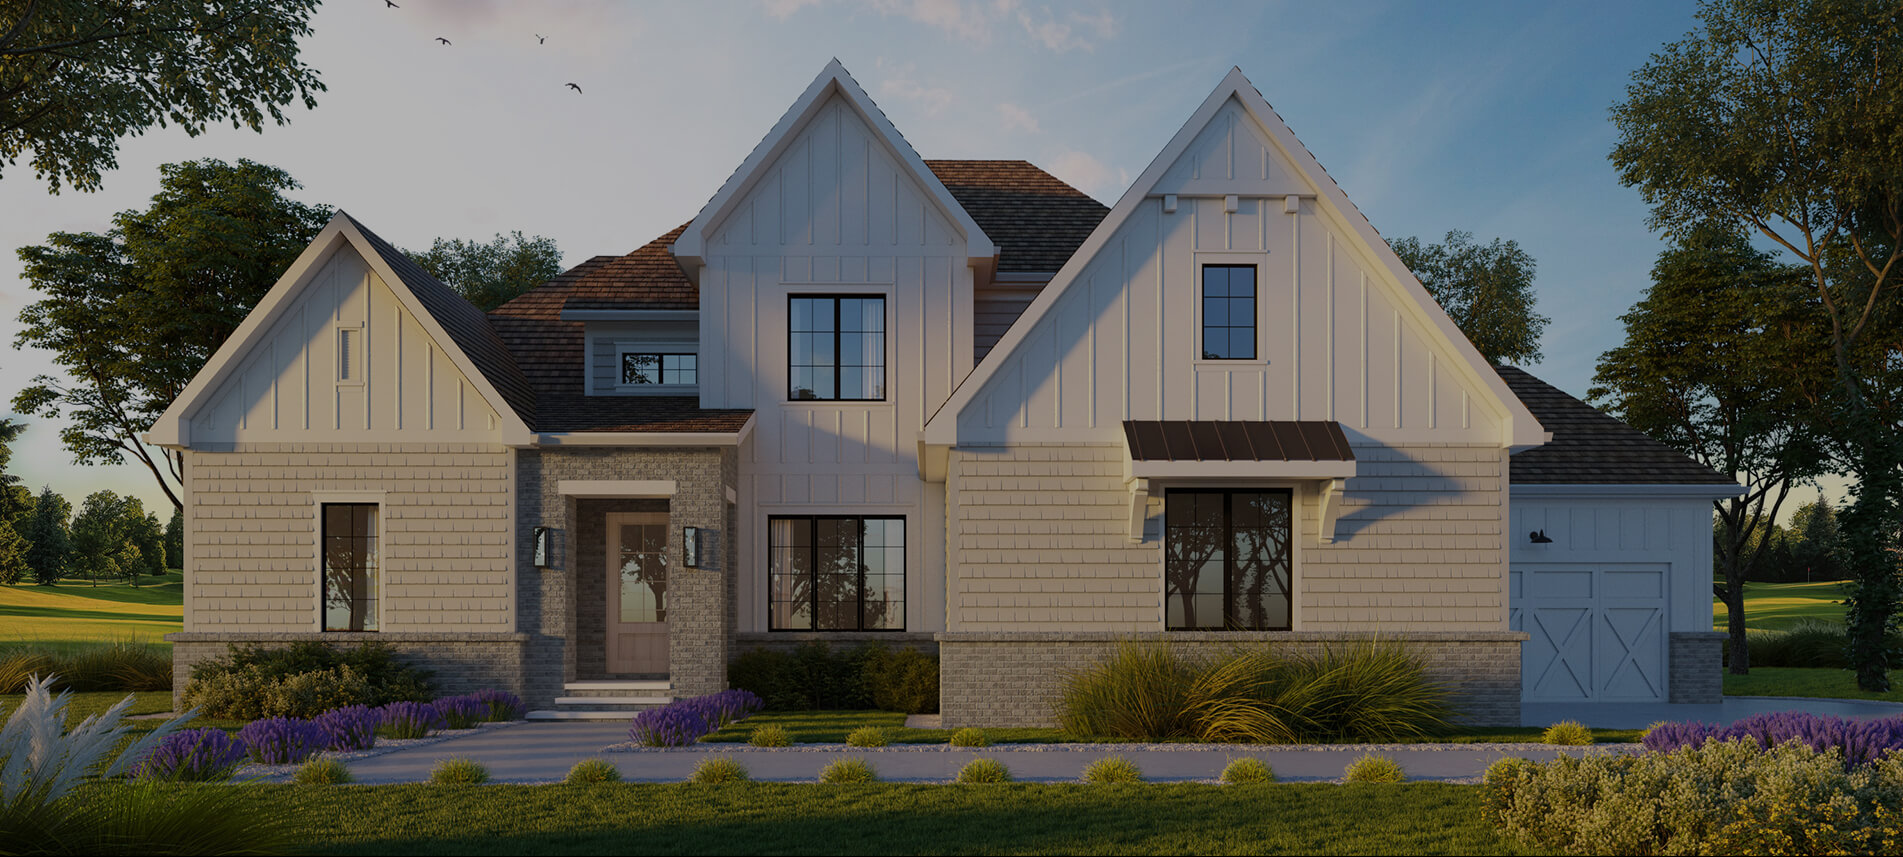 House Plan Spotlight: Rustic Style